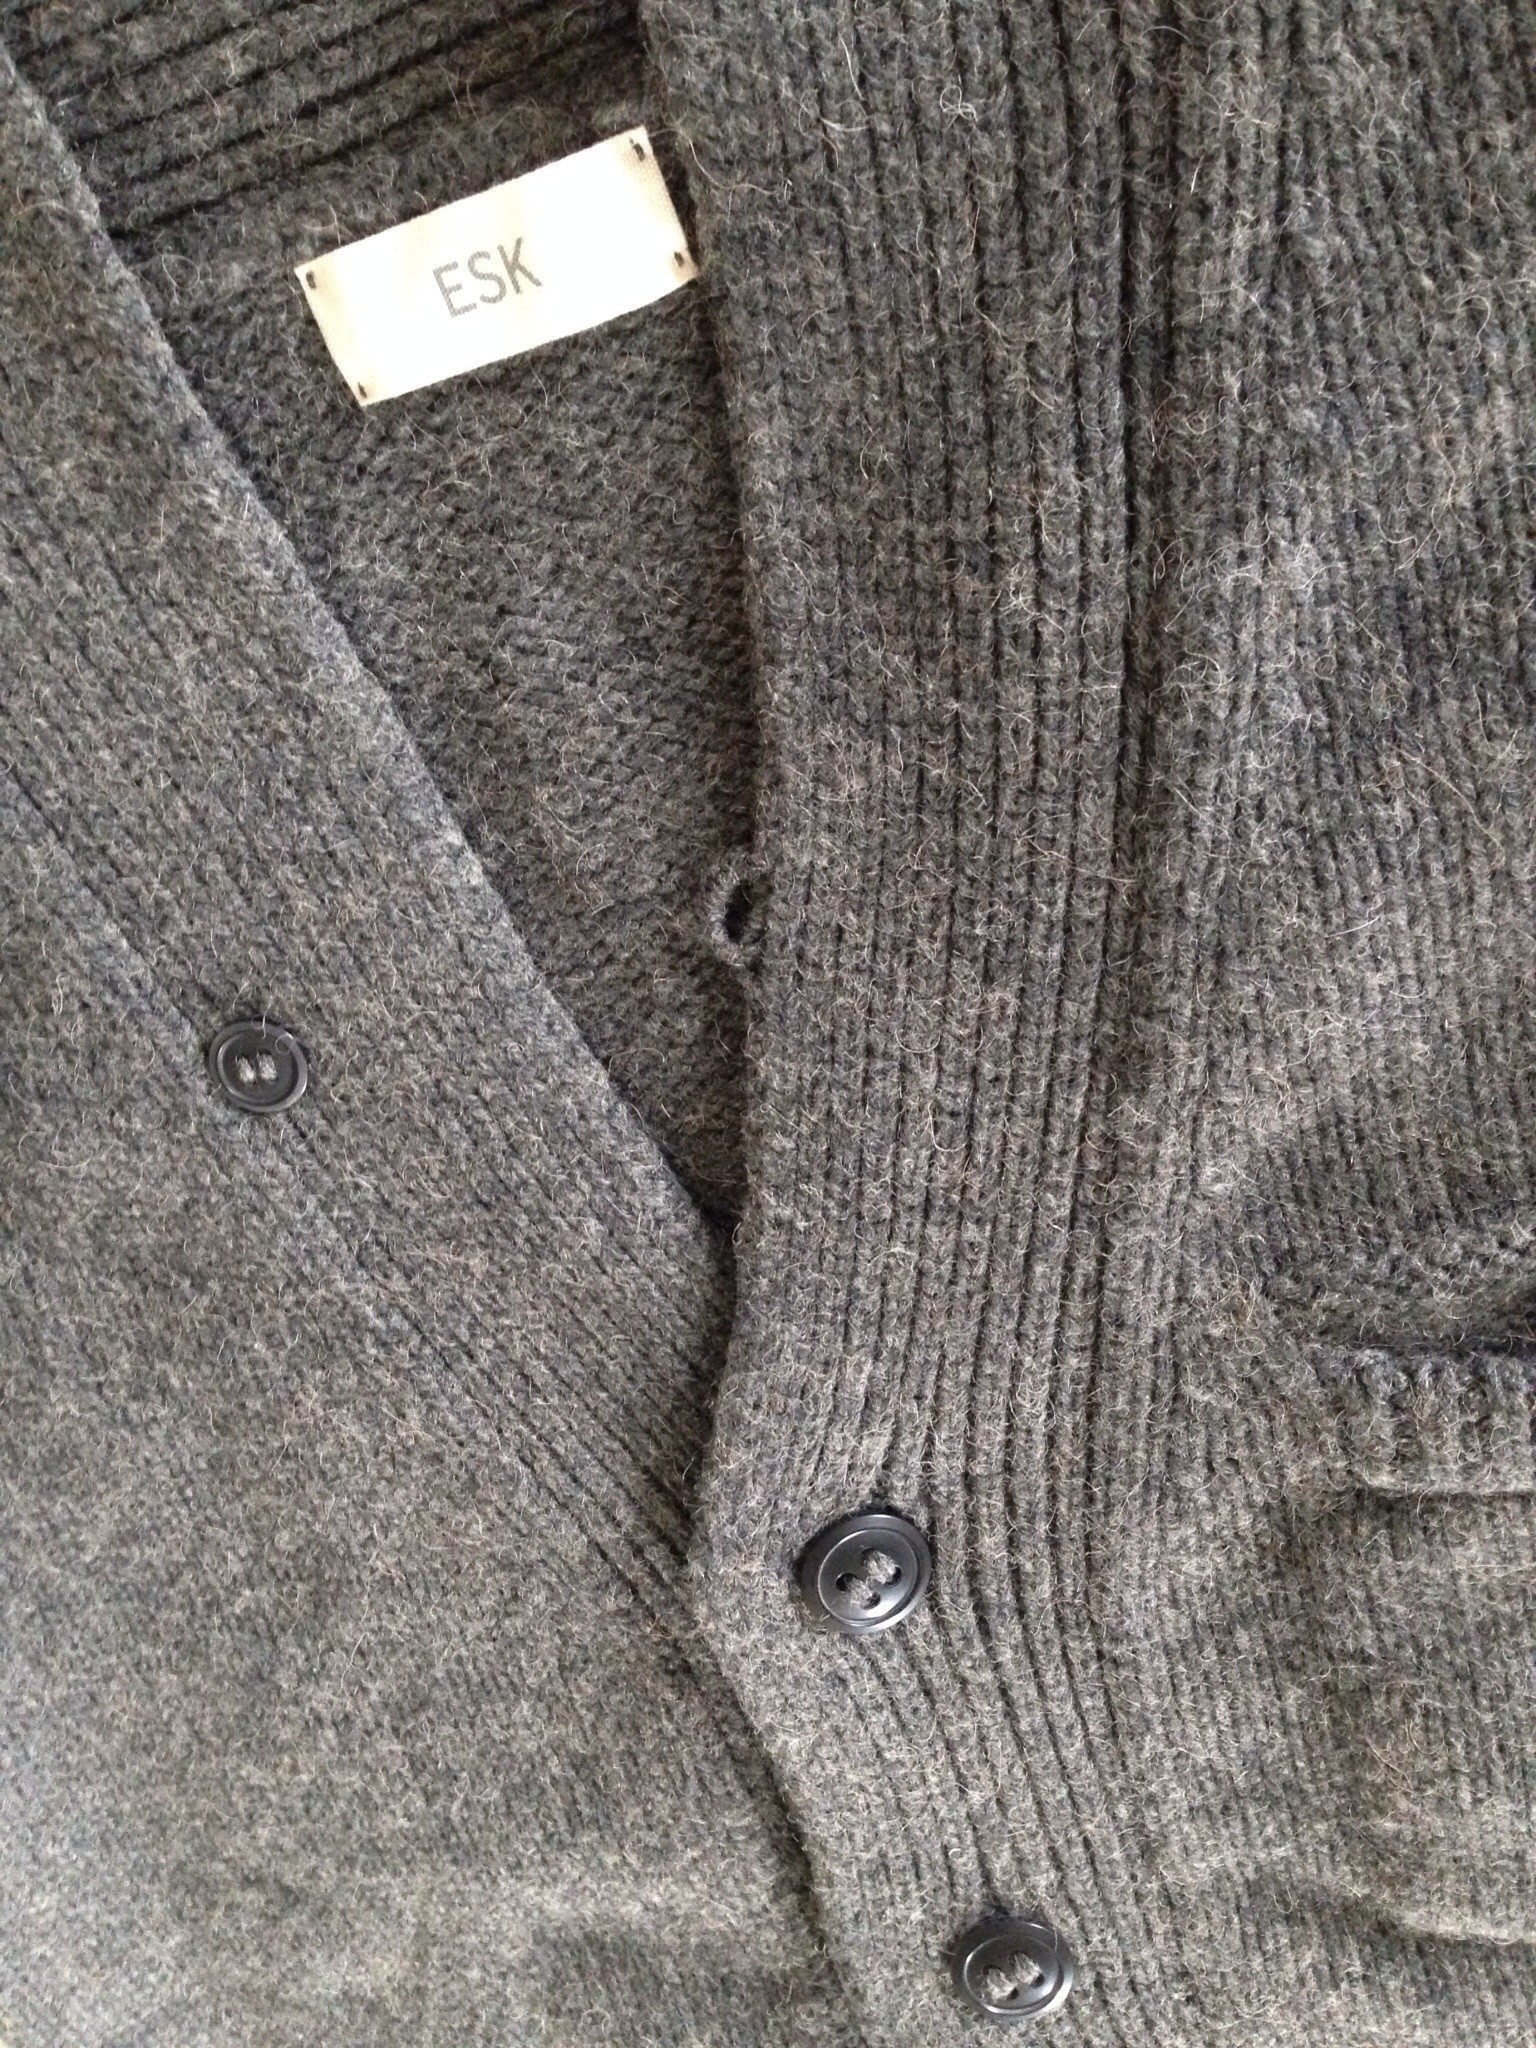 Esk Cashmere, Knitwear from Scotland | Styleforum